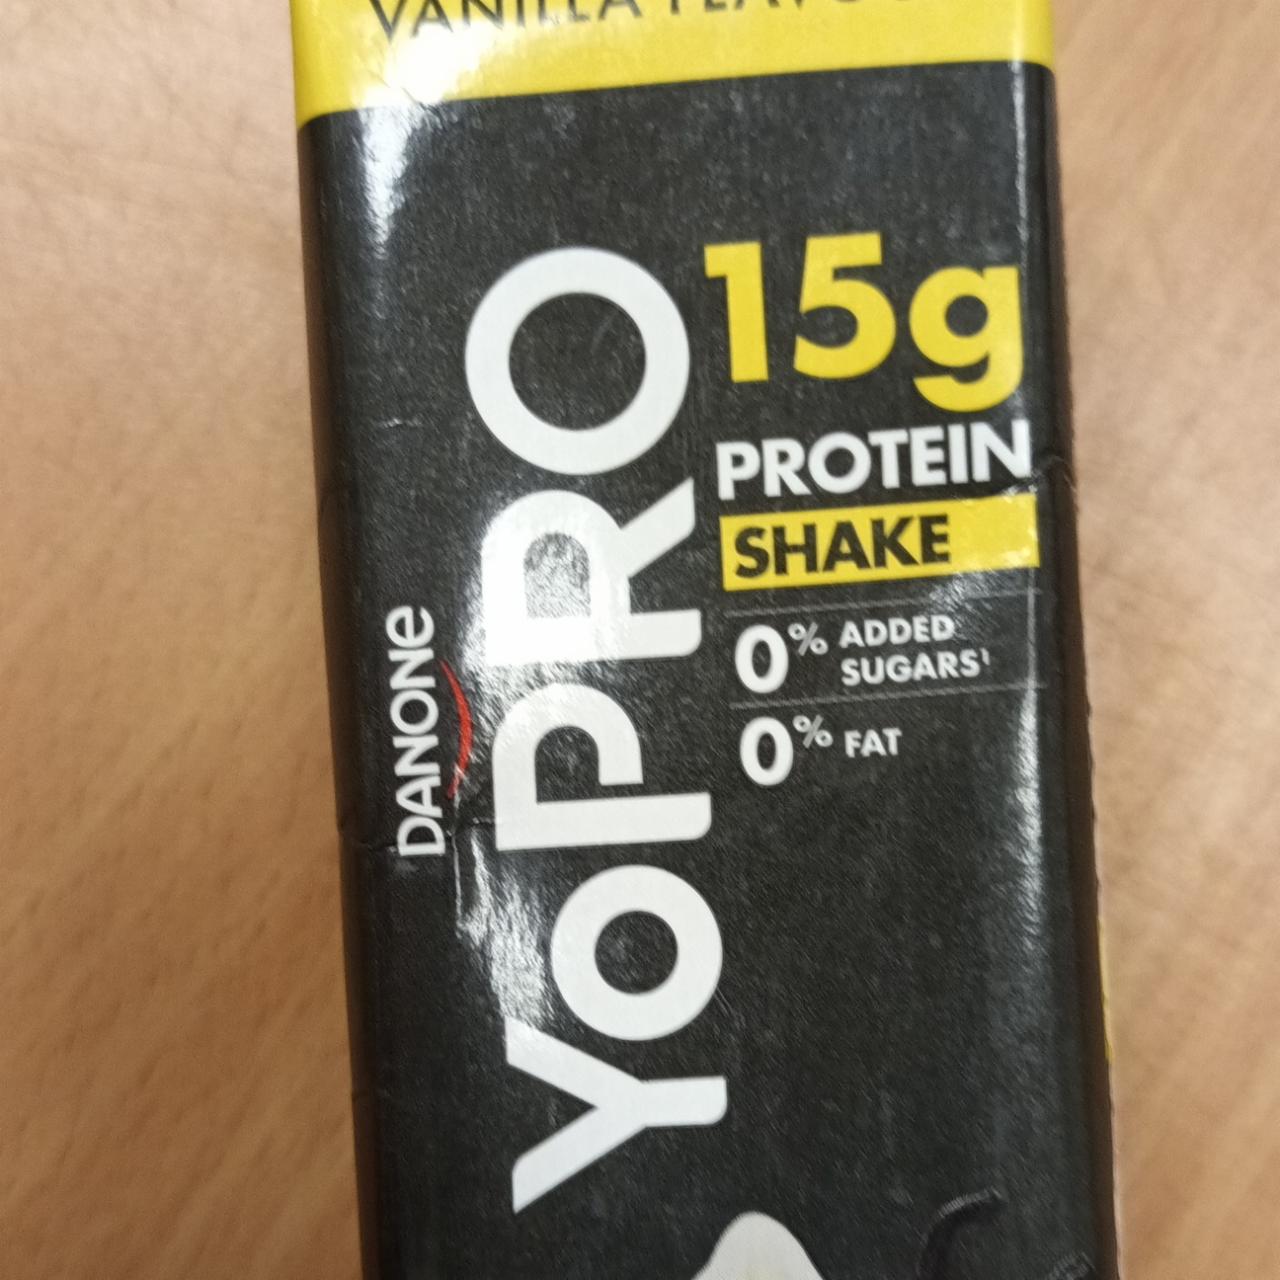 Фото - протеиновый йогурт ванильный YoPro Protein Shake Danone